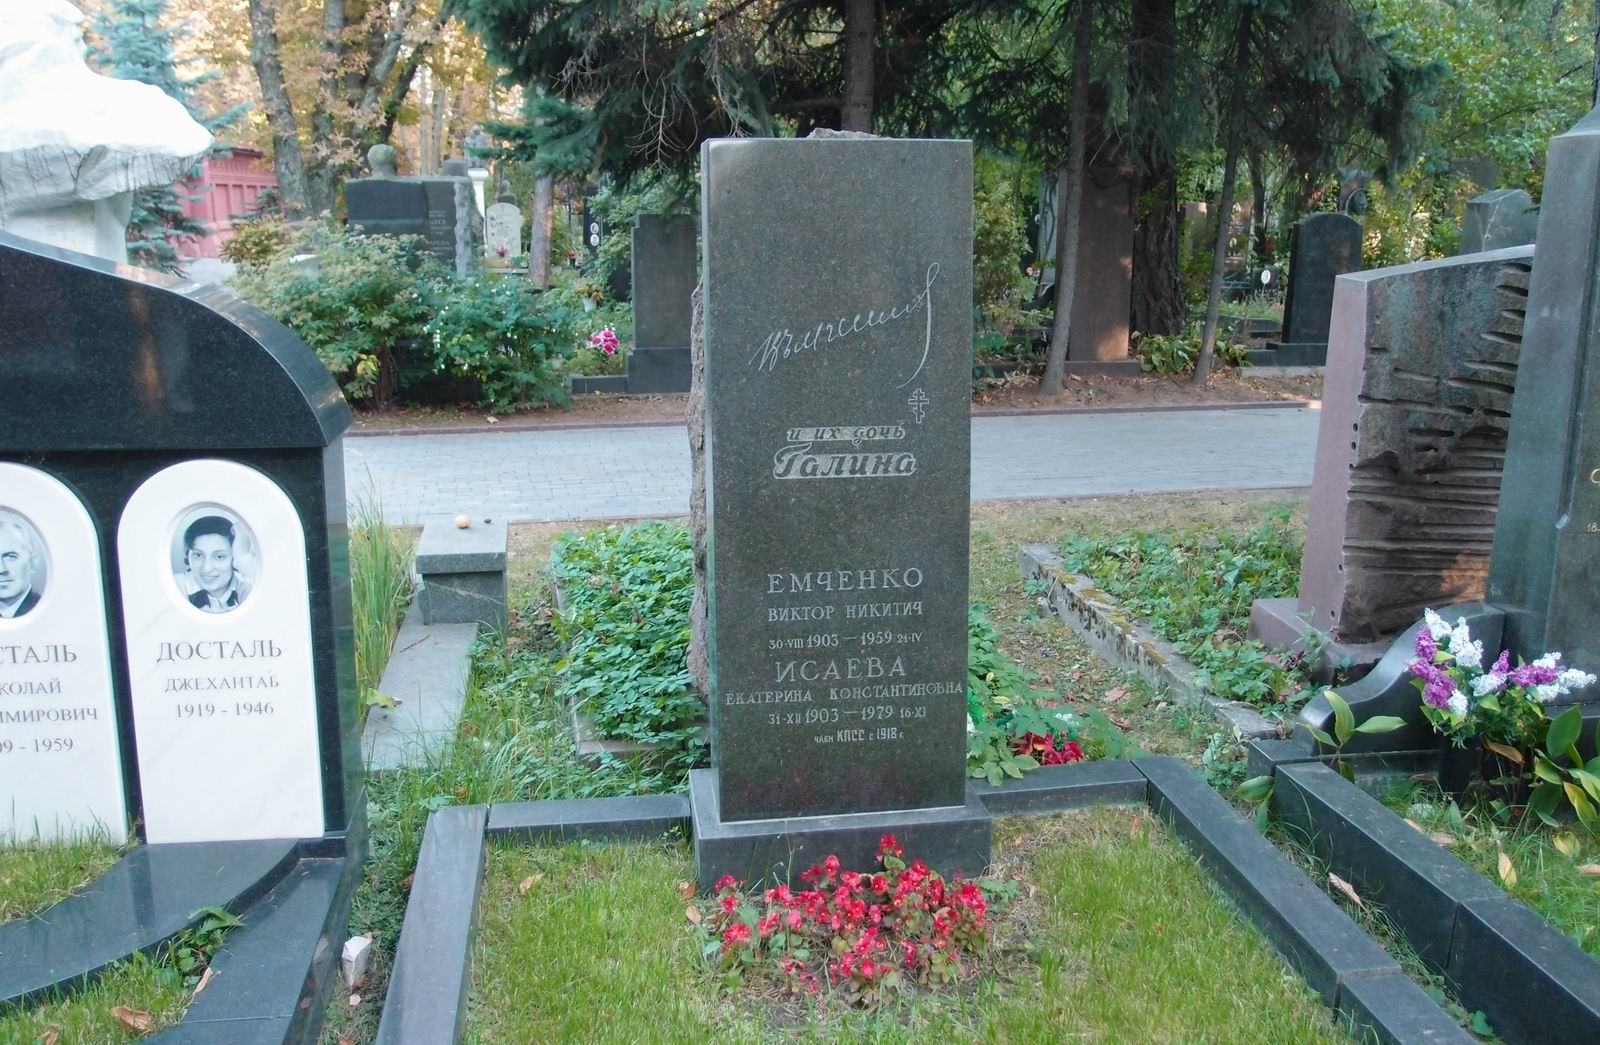 Памятник на могиле Емченко В.Н. (1903-1959), на Новодевичьем кладбище (5-32-3).